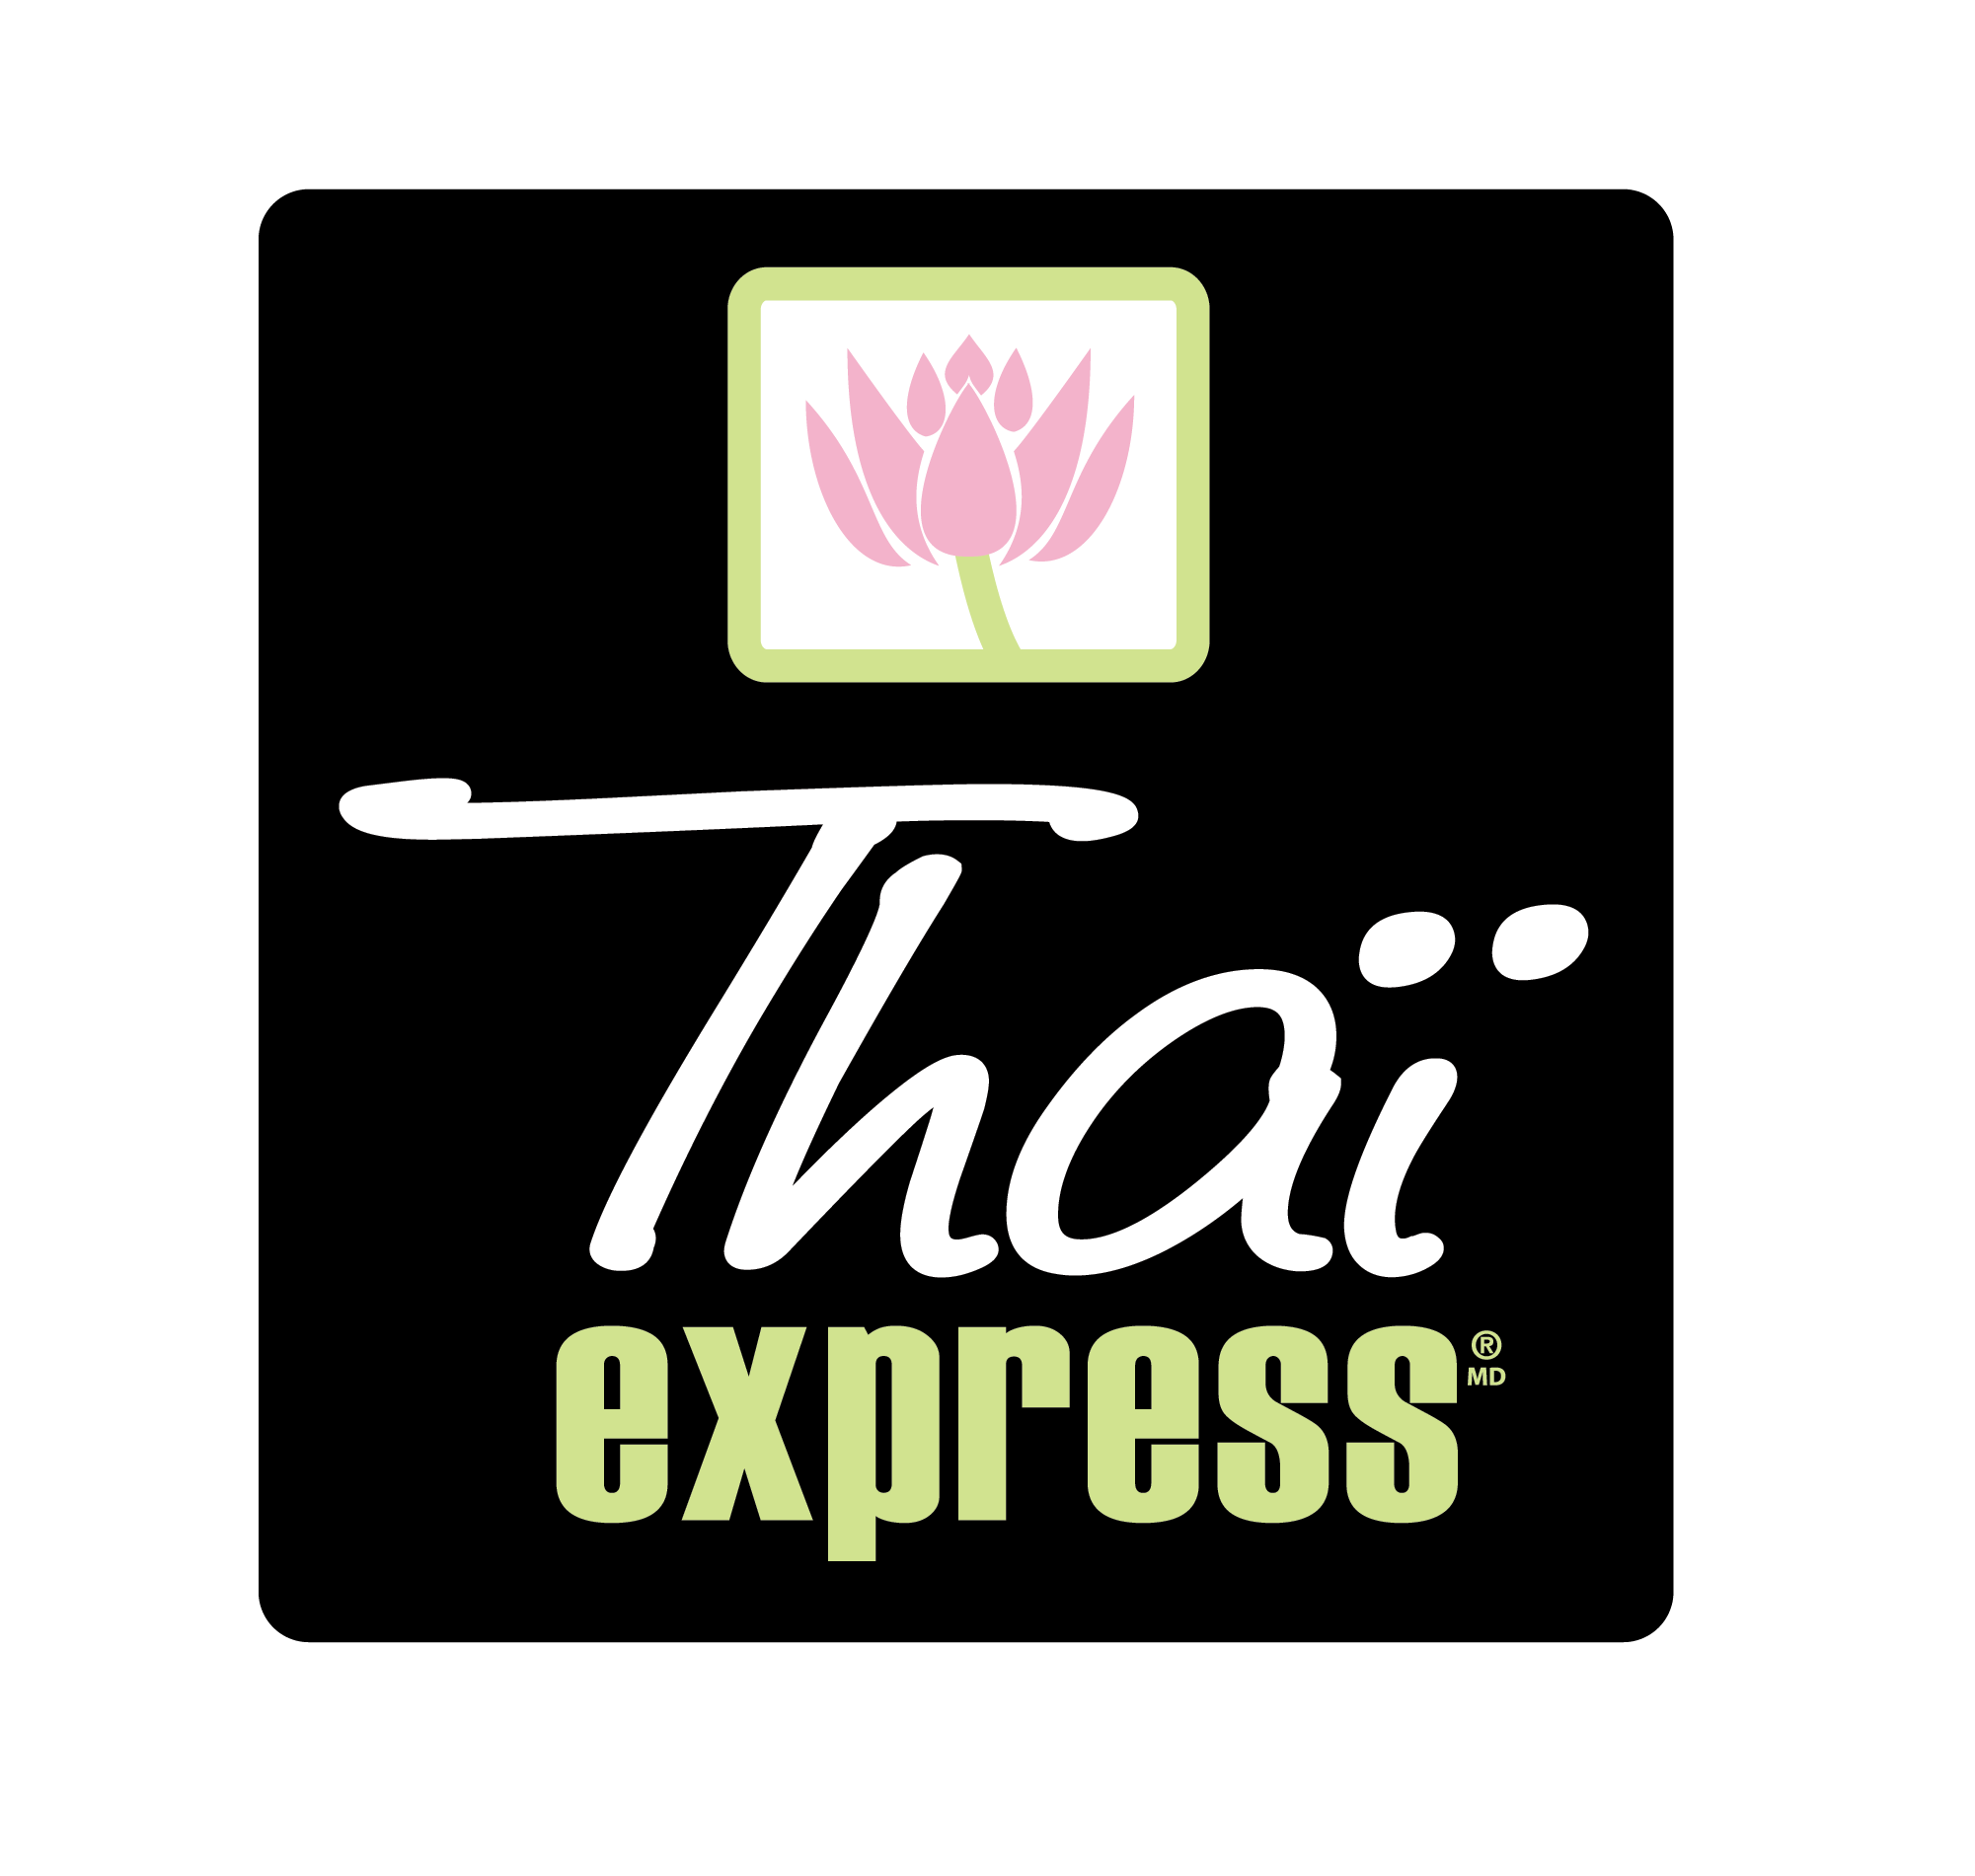 Thai Express logo